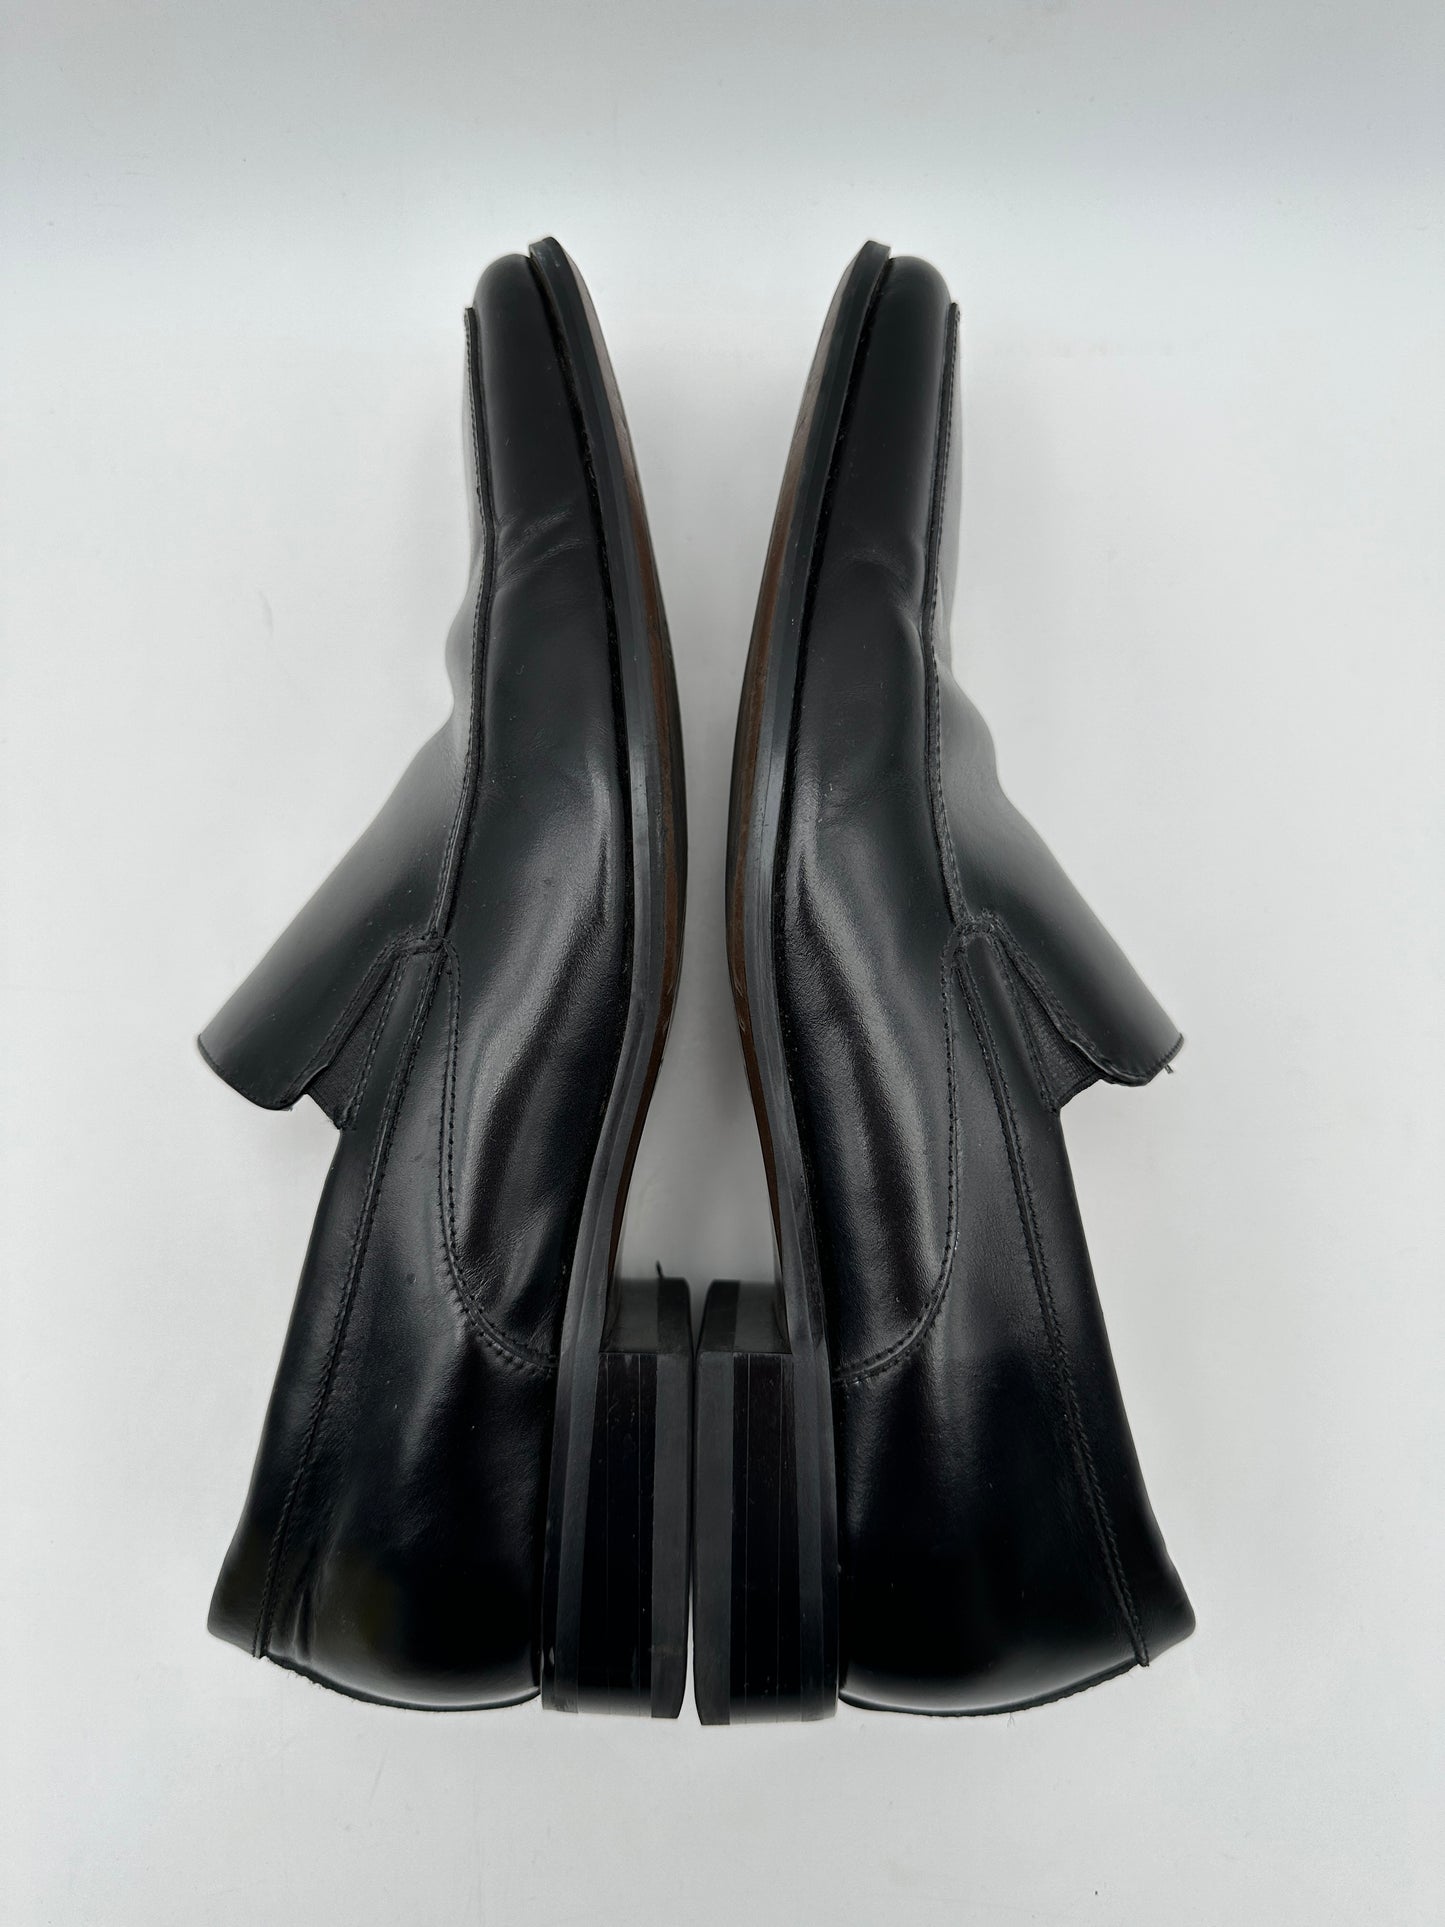 Stacy Adams Men's Size 10 Black Leather Slip-On Dress Shoes